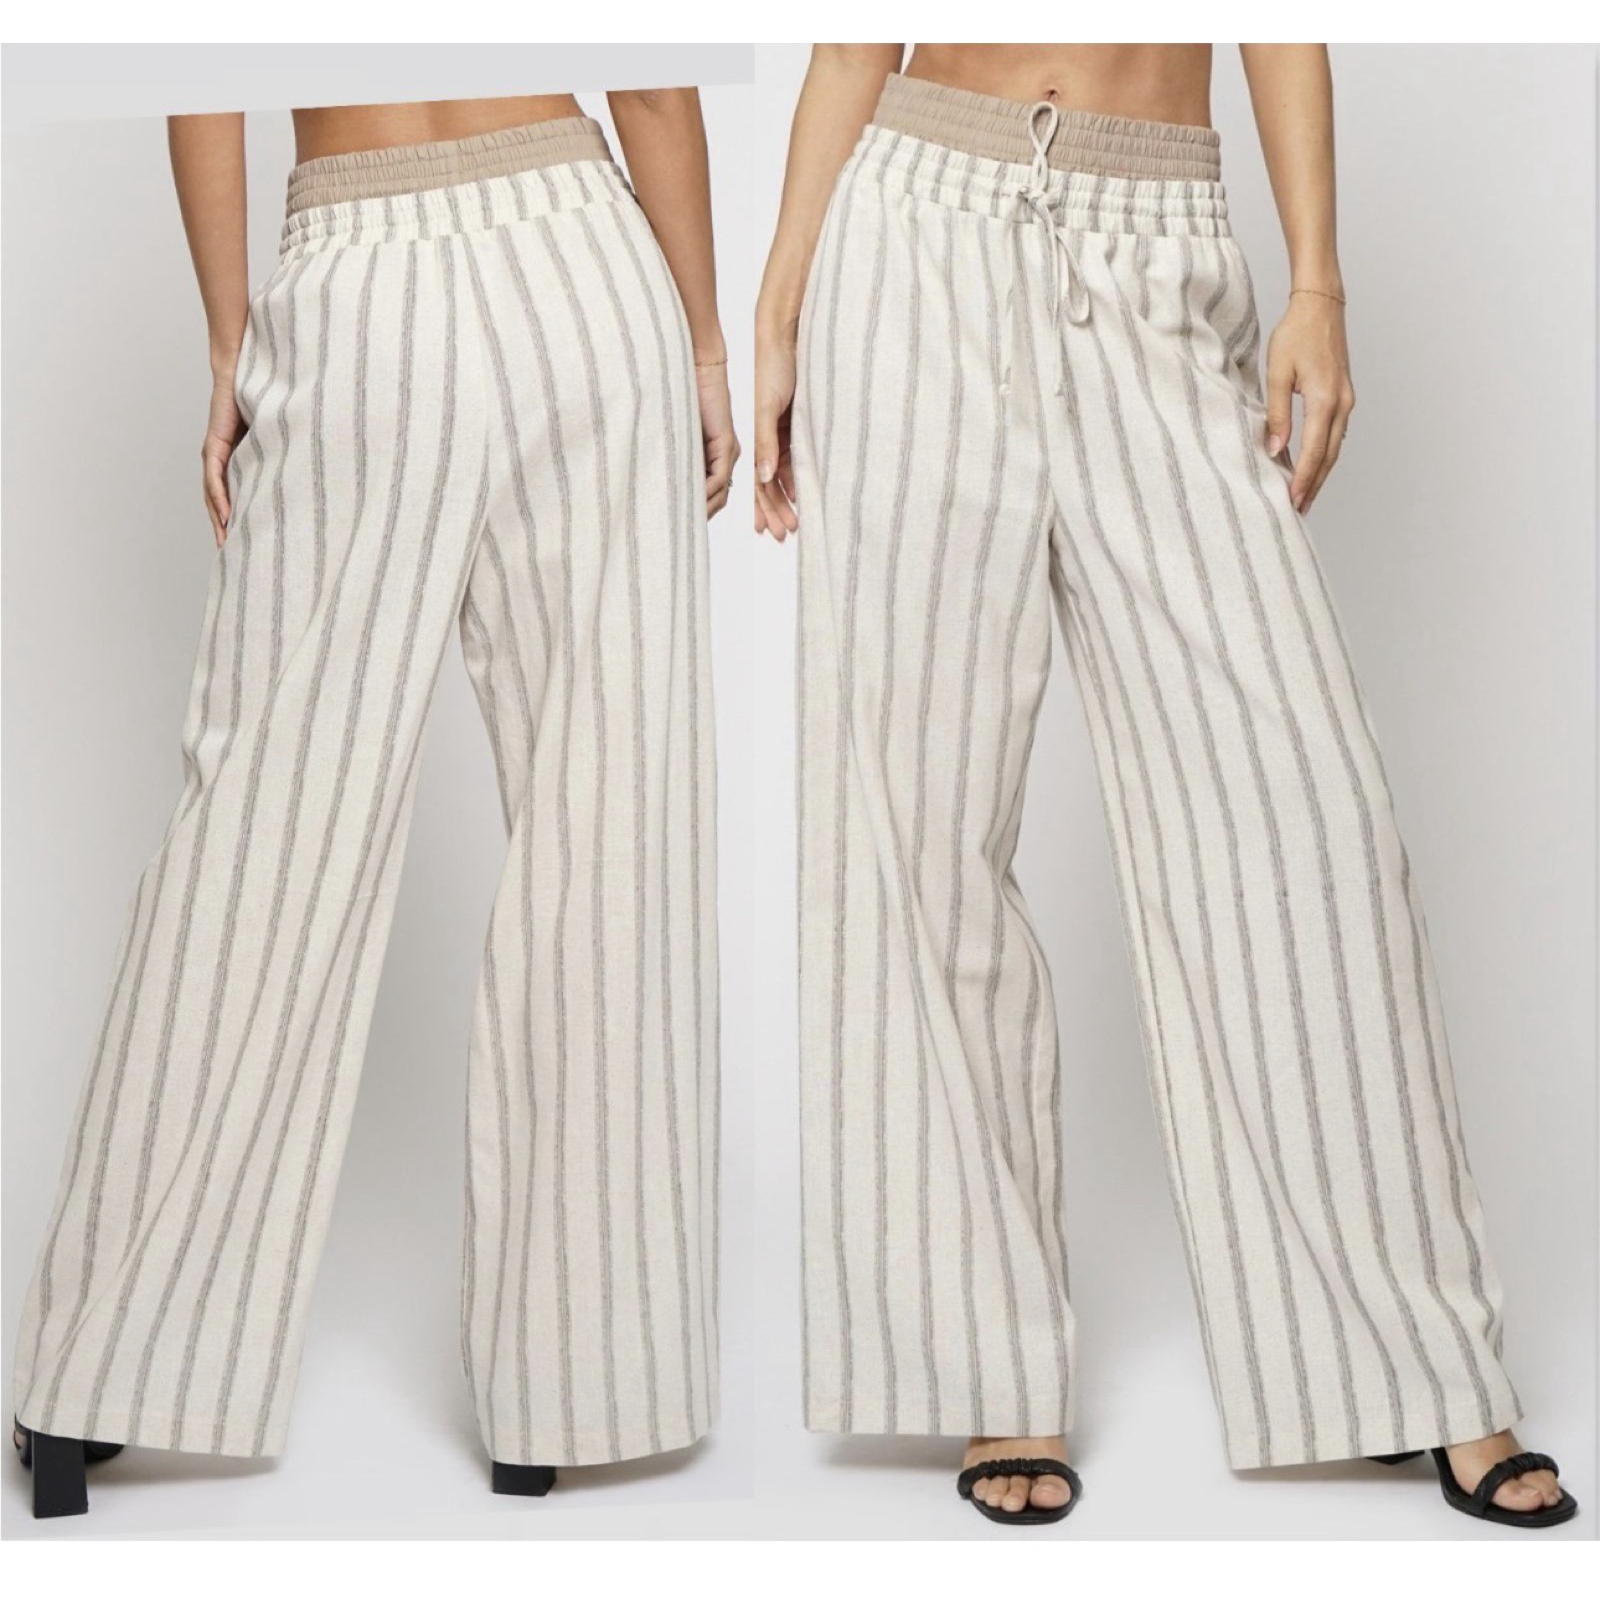 Natural striped line pants